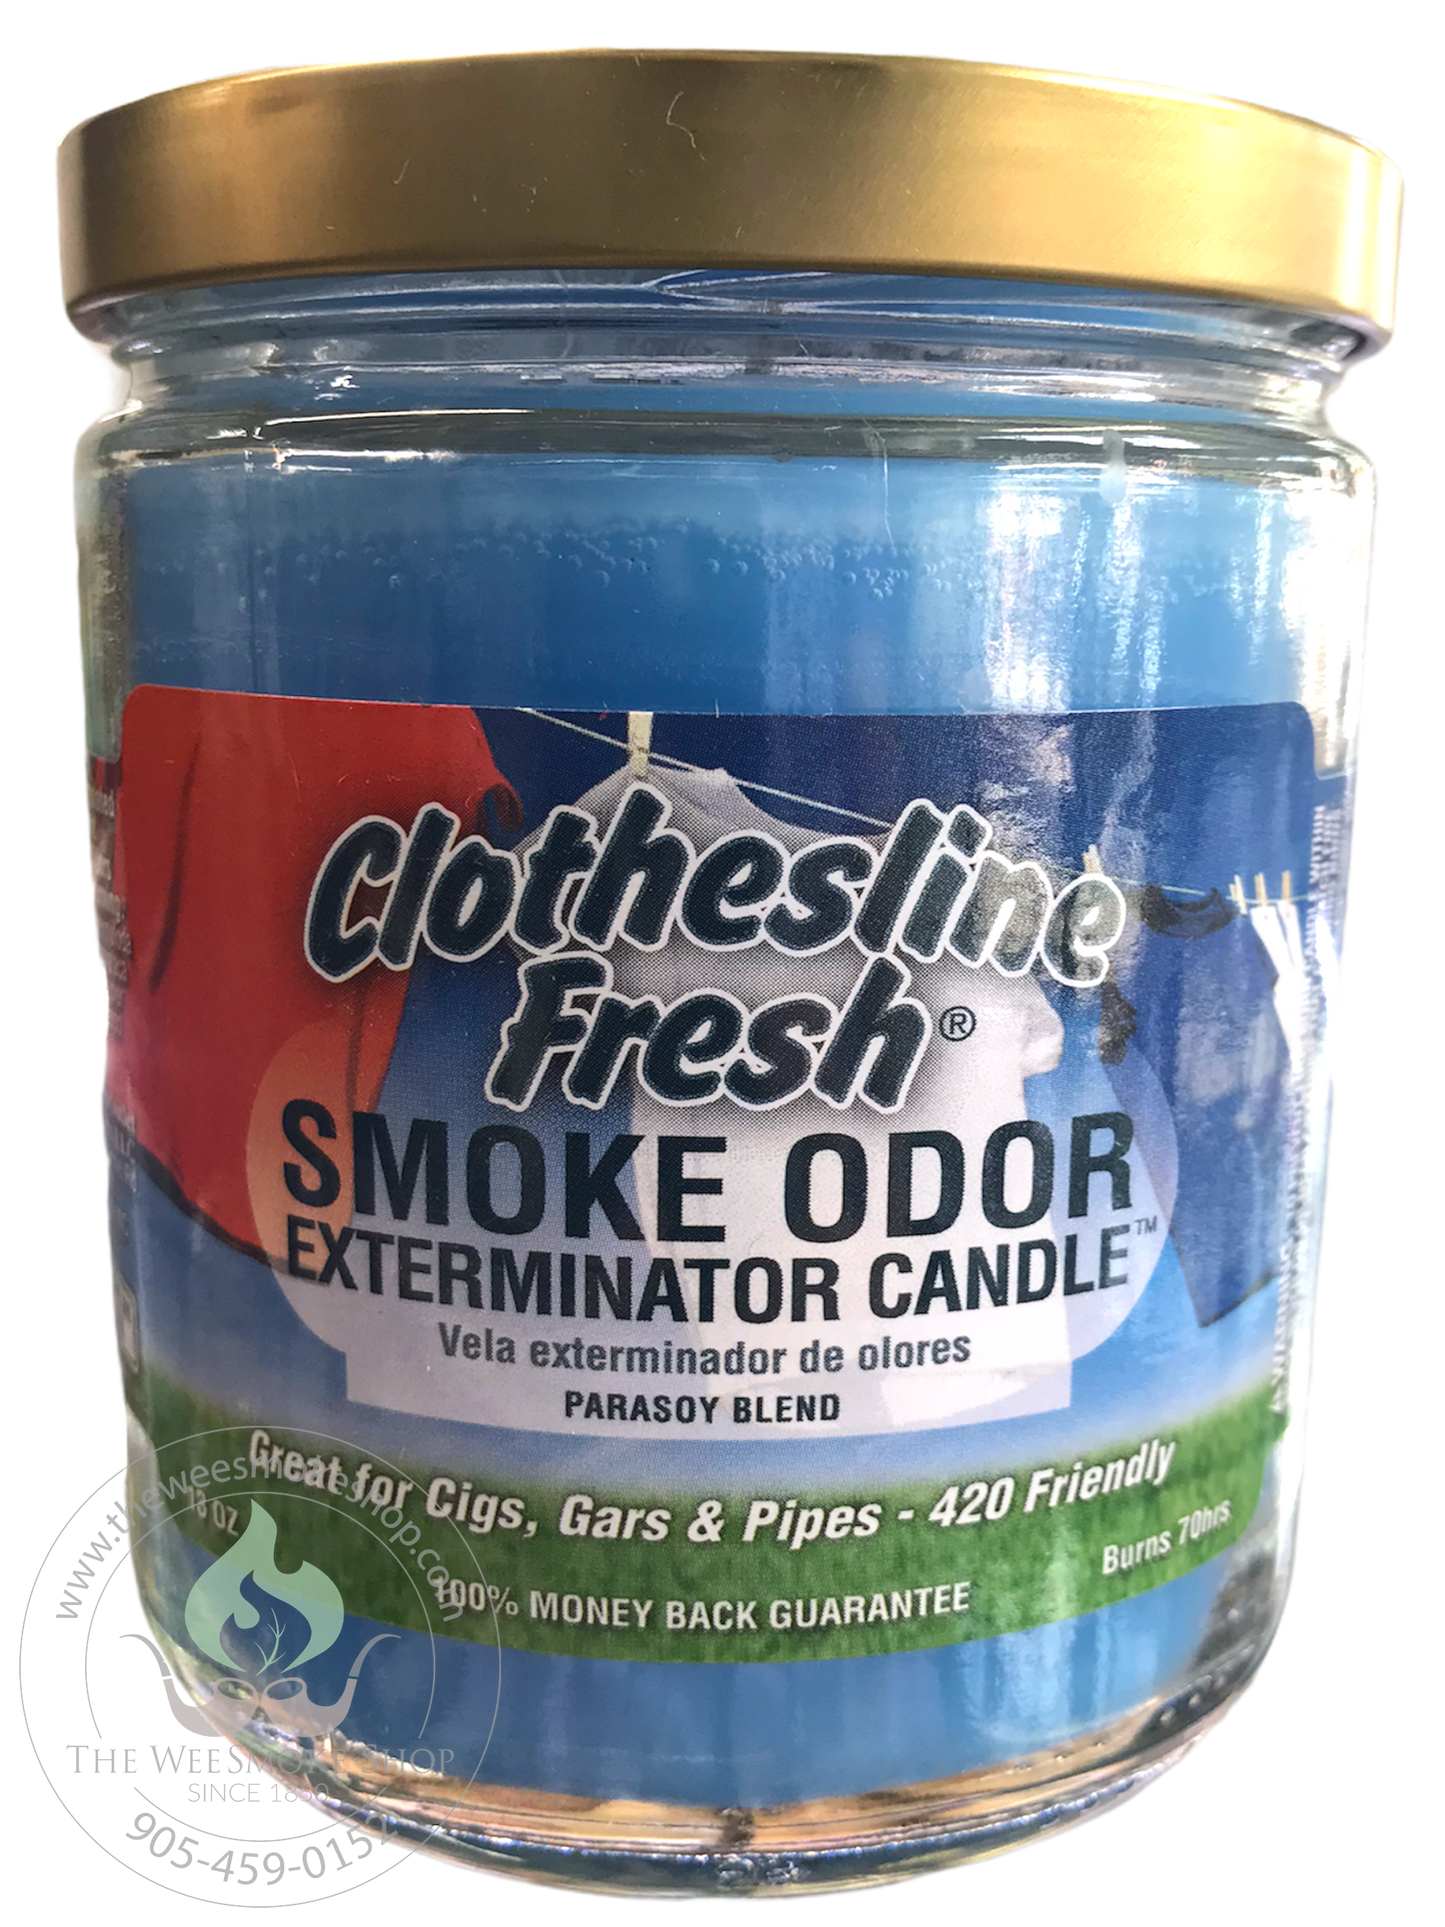 Clothsline Fresh Smoke Odor Exterminator Candle - Wee Smoke Shop